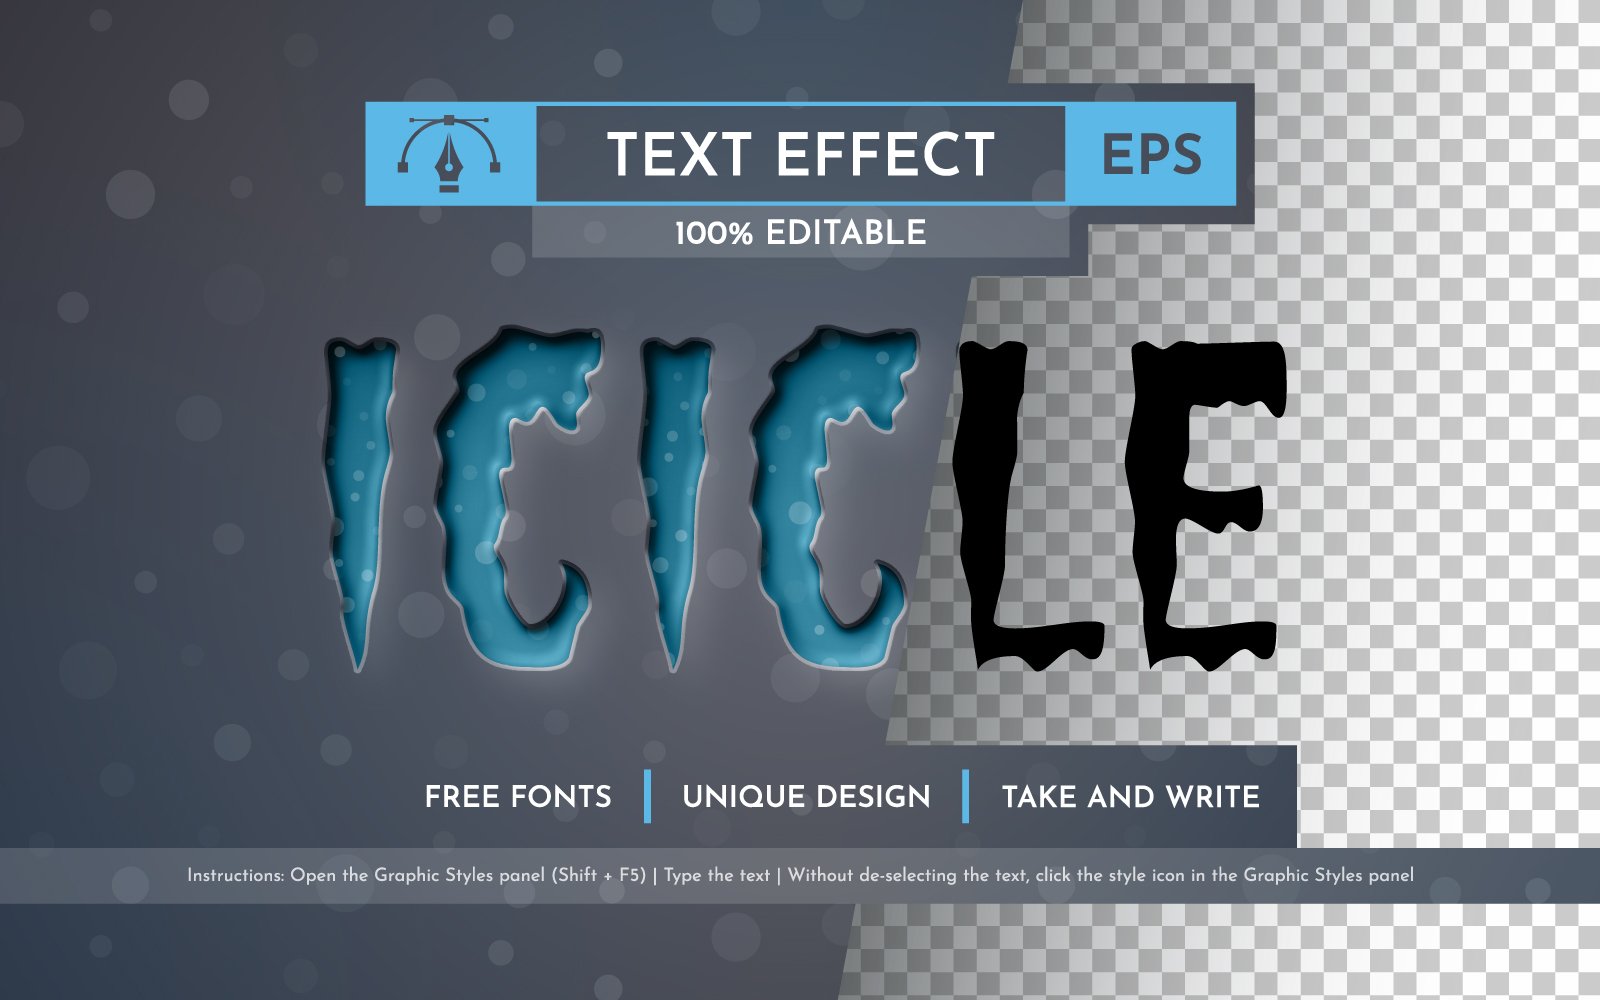 Template #373339 Text Effect Webdesign Template - Logo template Preview